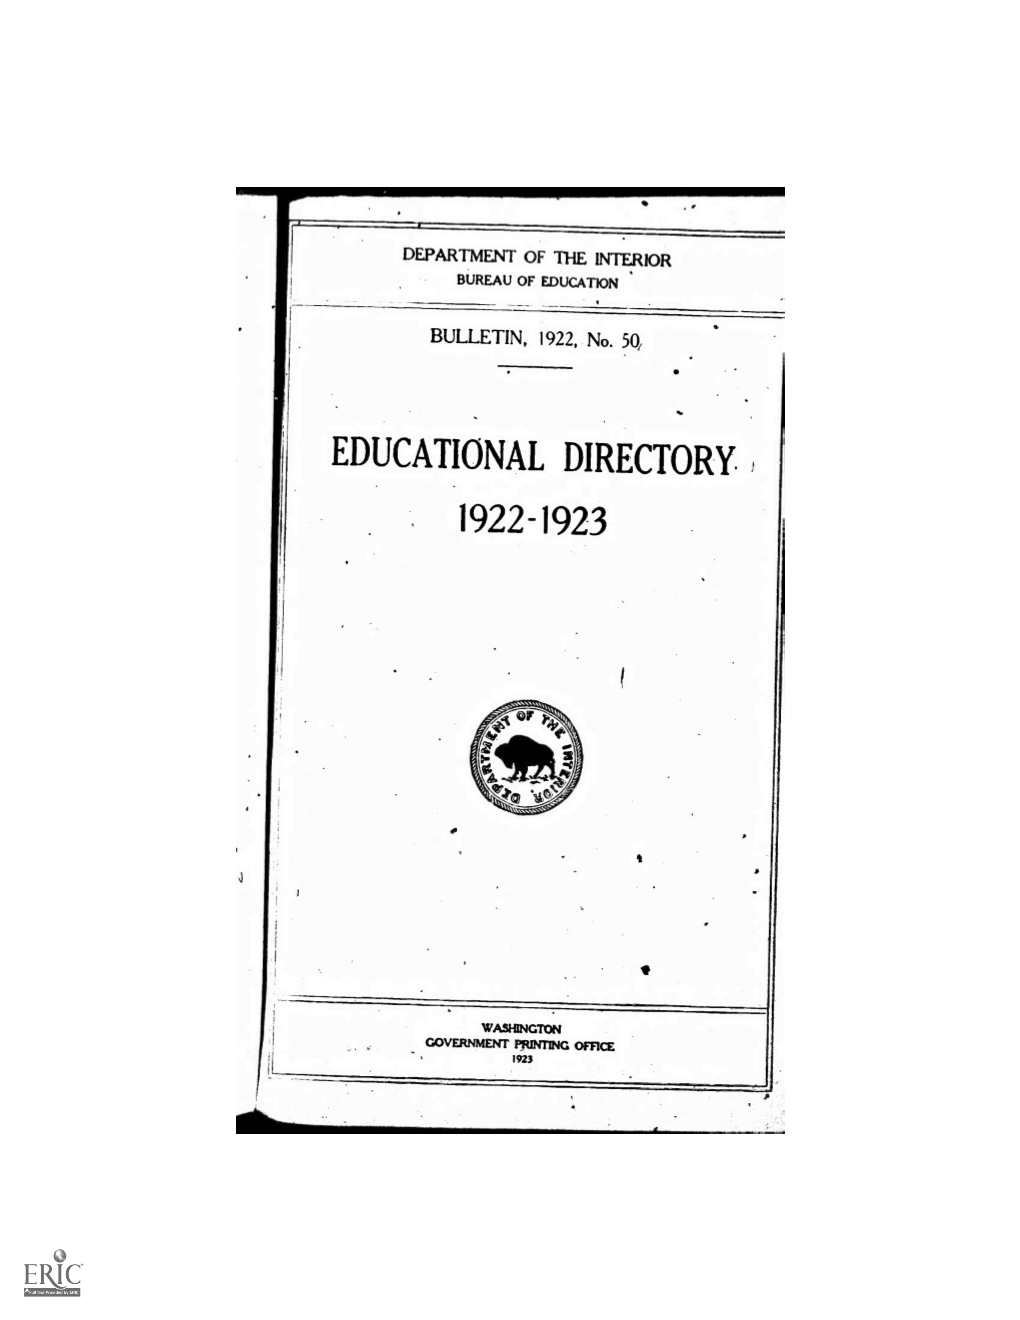 Educational Directory, 1